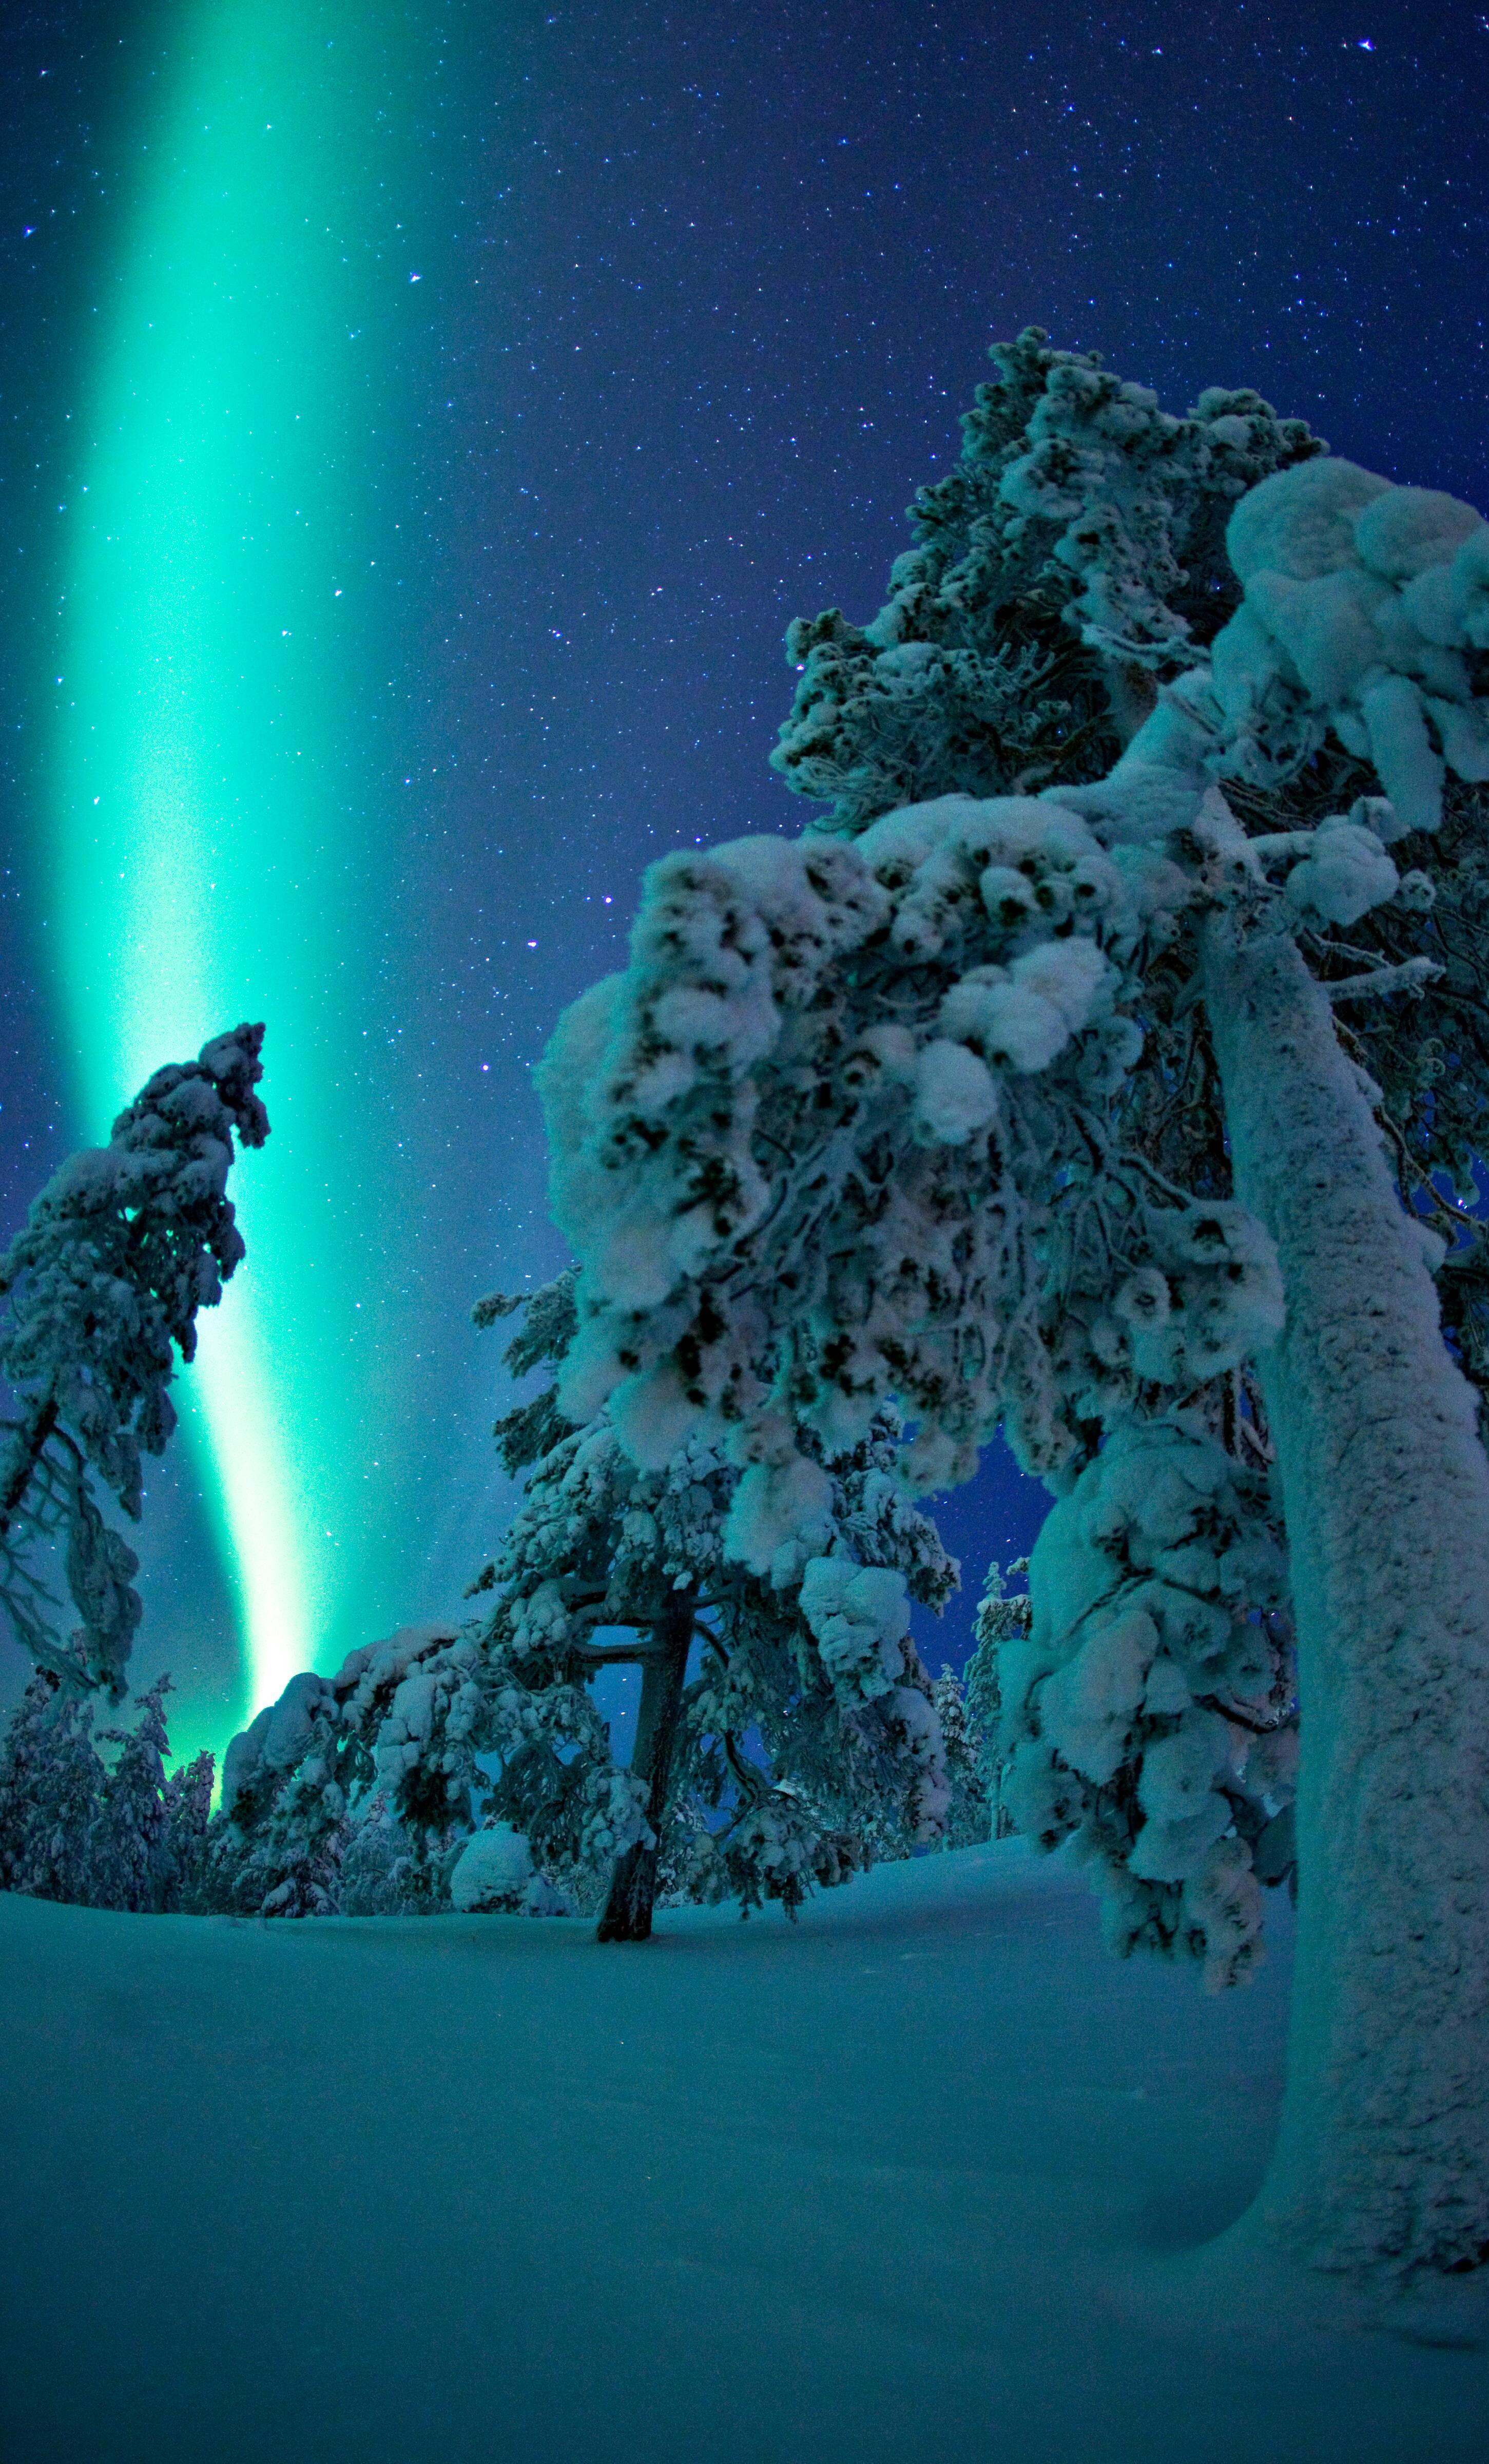 Blue Aurora Borealis in the night sky in Finnish Lapland